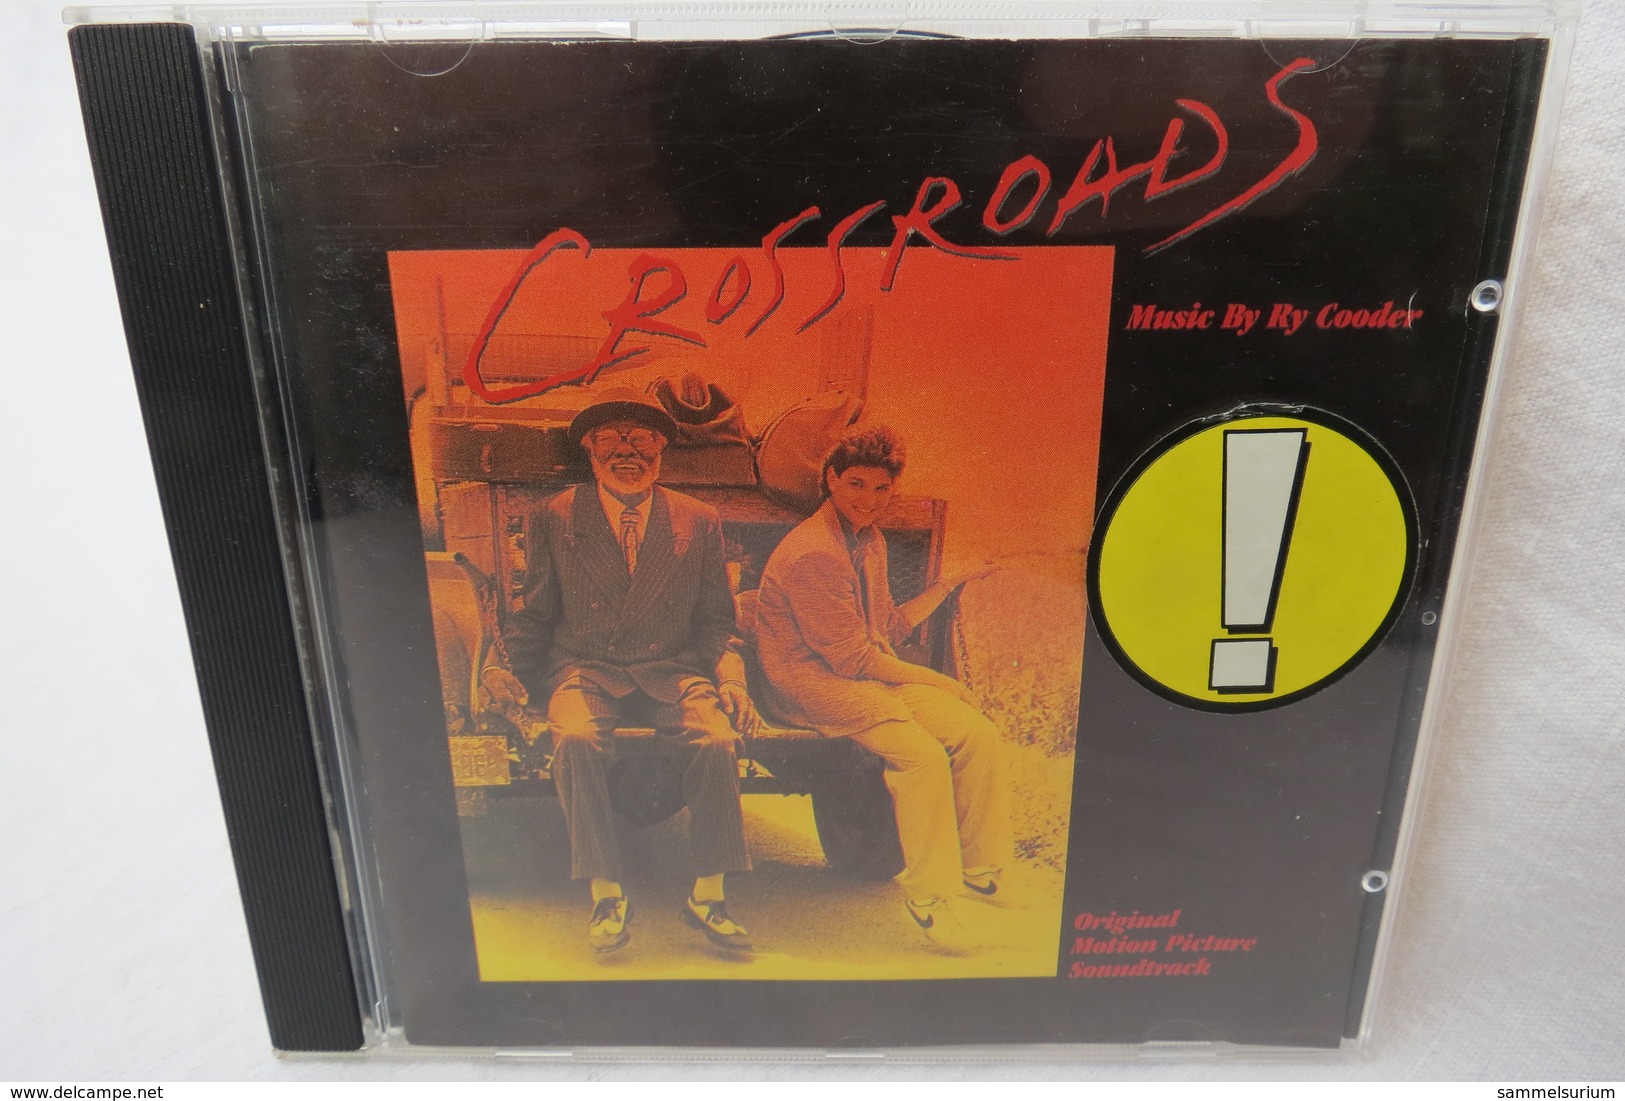 CD "Ry Cooder" Crossroads, Original Motion Picture Soundtrack - Filmmusik